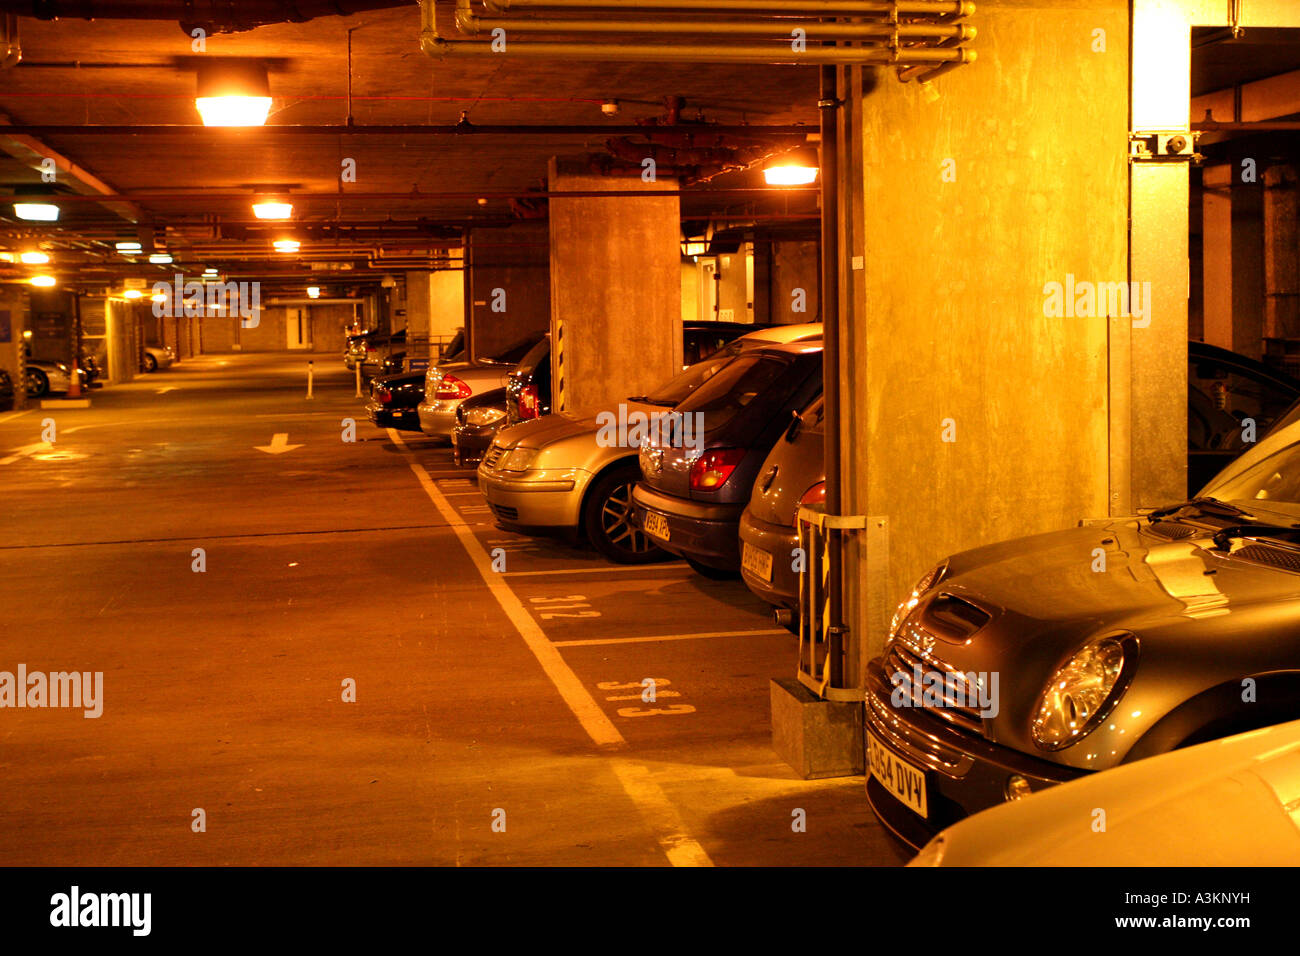 Underground lit car park in Central London Stock Photo - Alamy